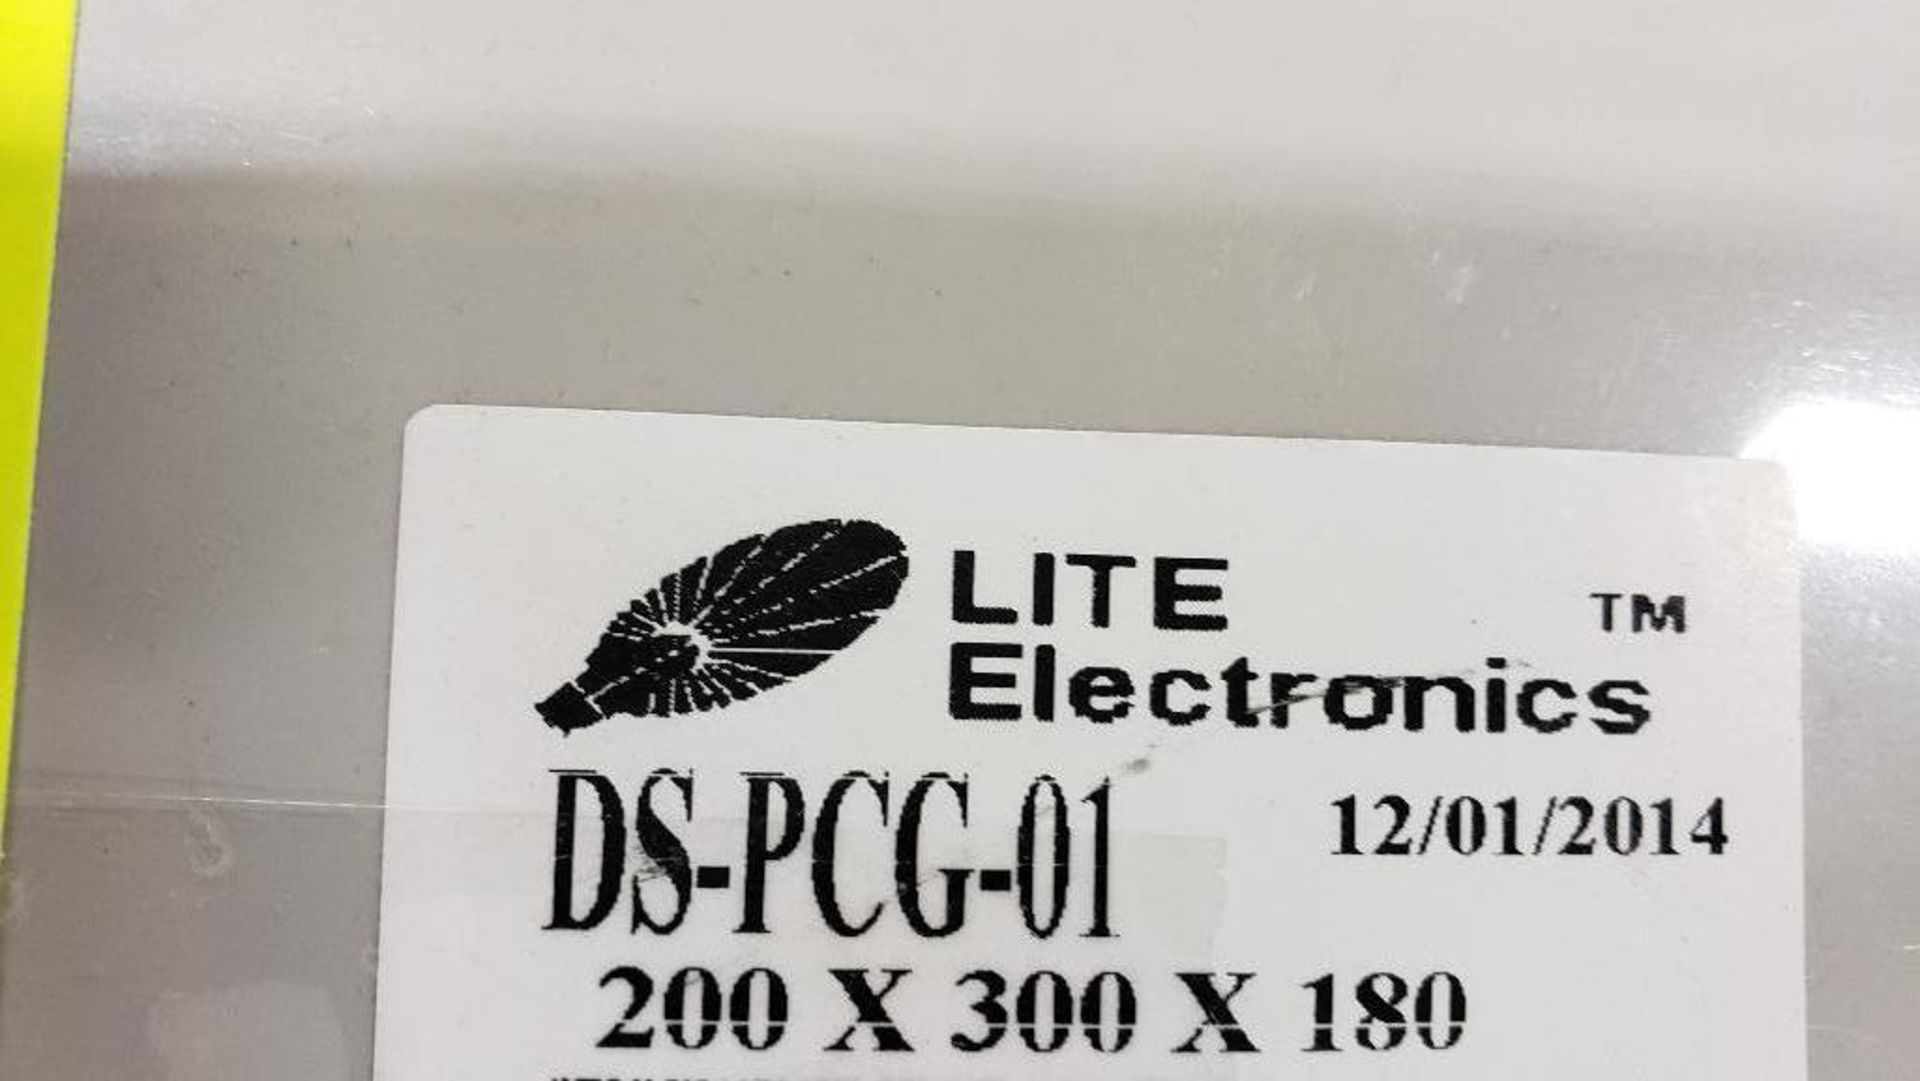 Qty 4 - LIte Electronics enclosure. 200x300x180mm. Model DS-PCG-01. New. - Image 2 of 5